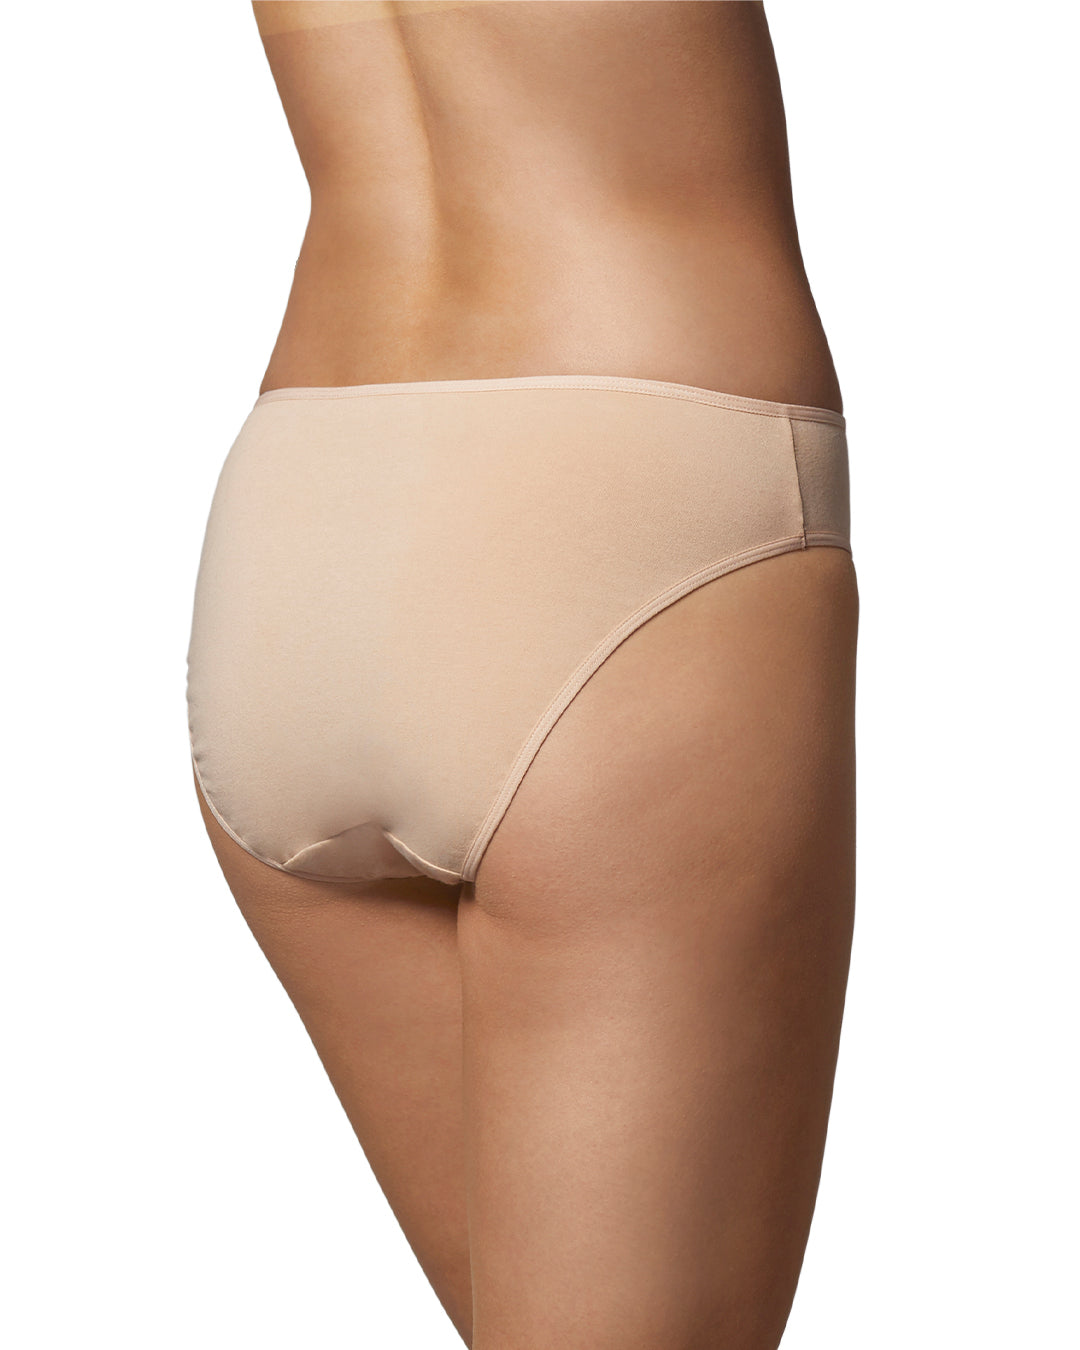 150 Wholesale Women's Brown Cotton Panty, Size 9 - at